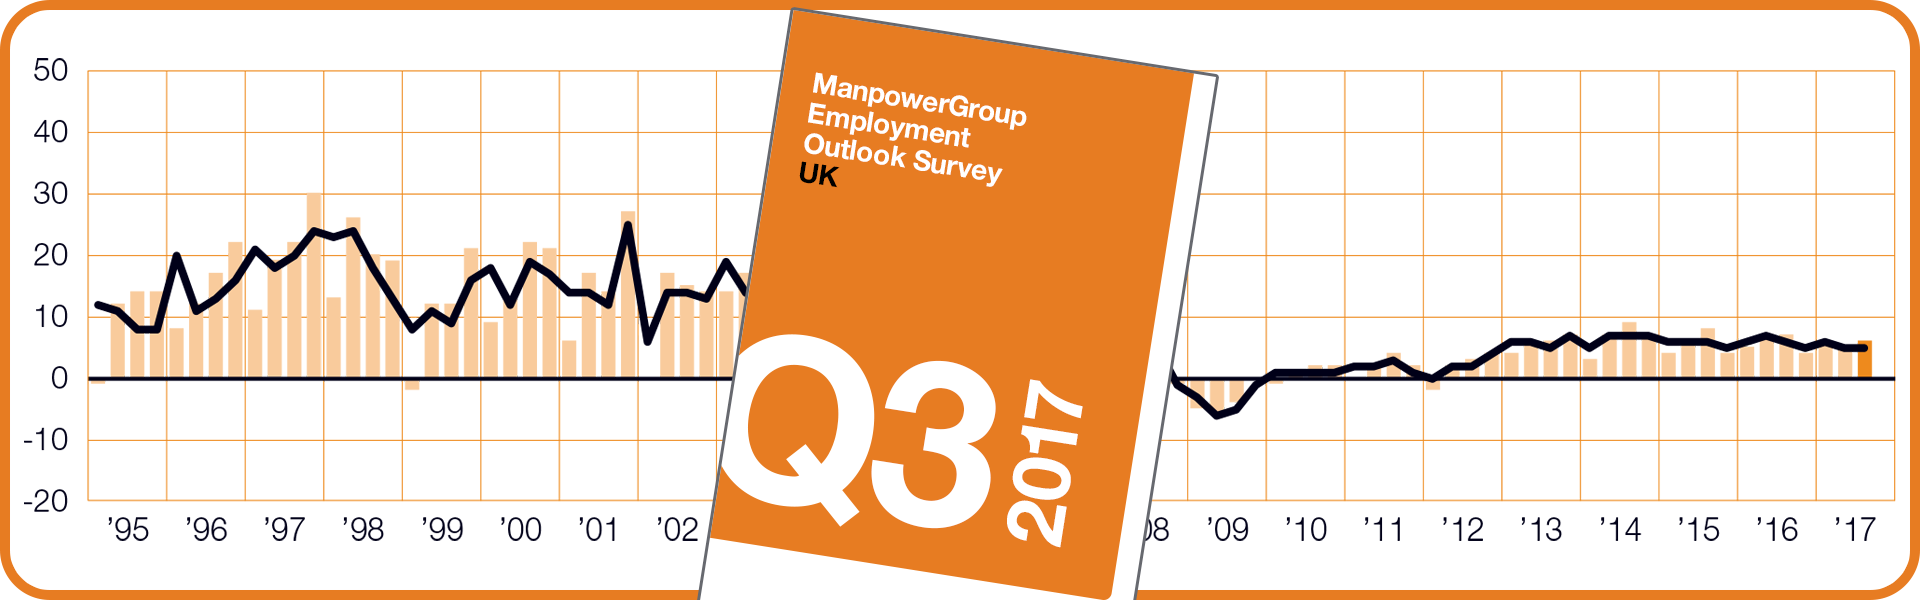 ManpowerGroup Employment Outlook Survey